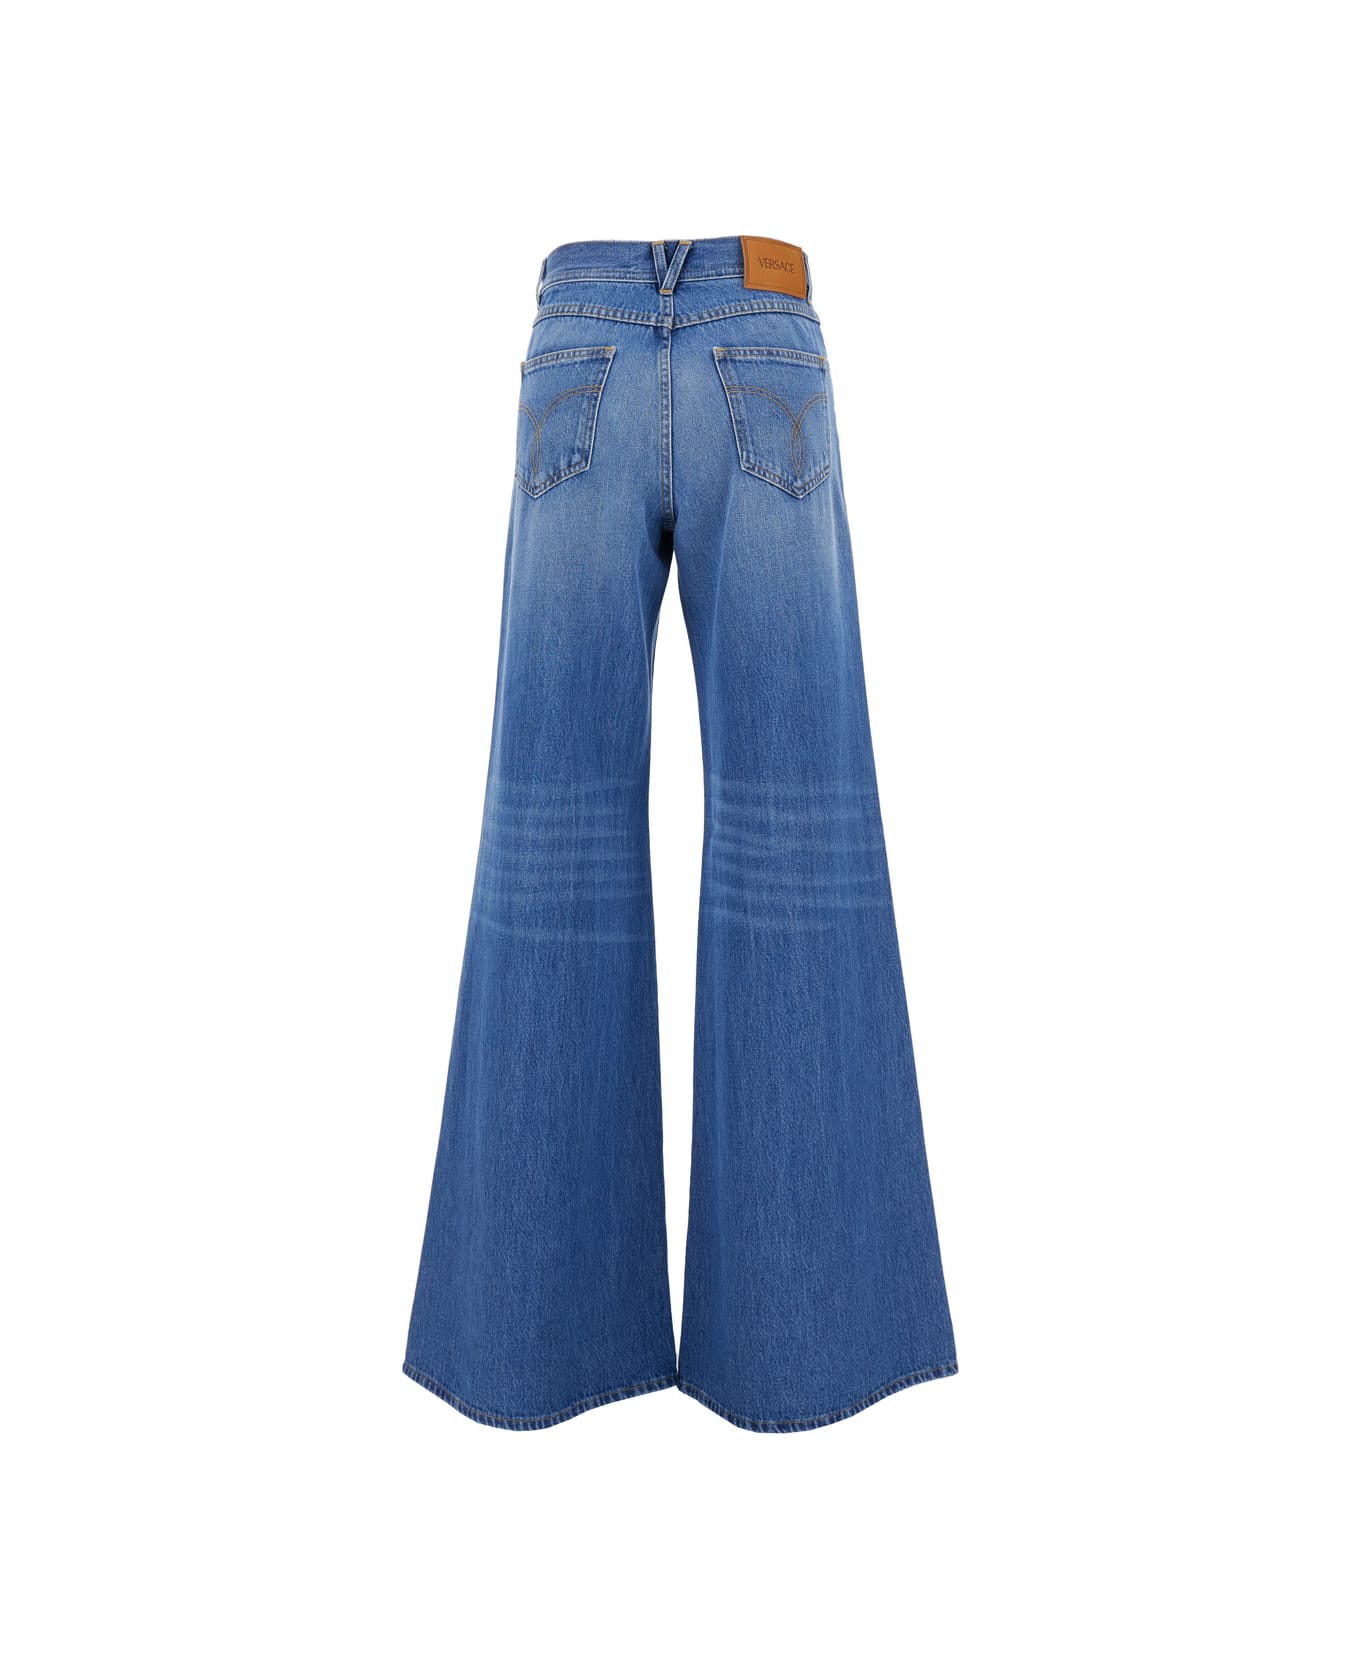 Versace Denim Pants - Medium Blue デニム